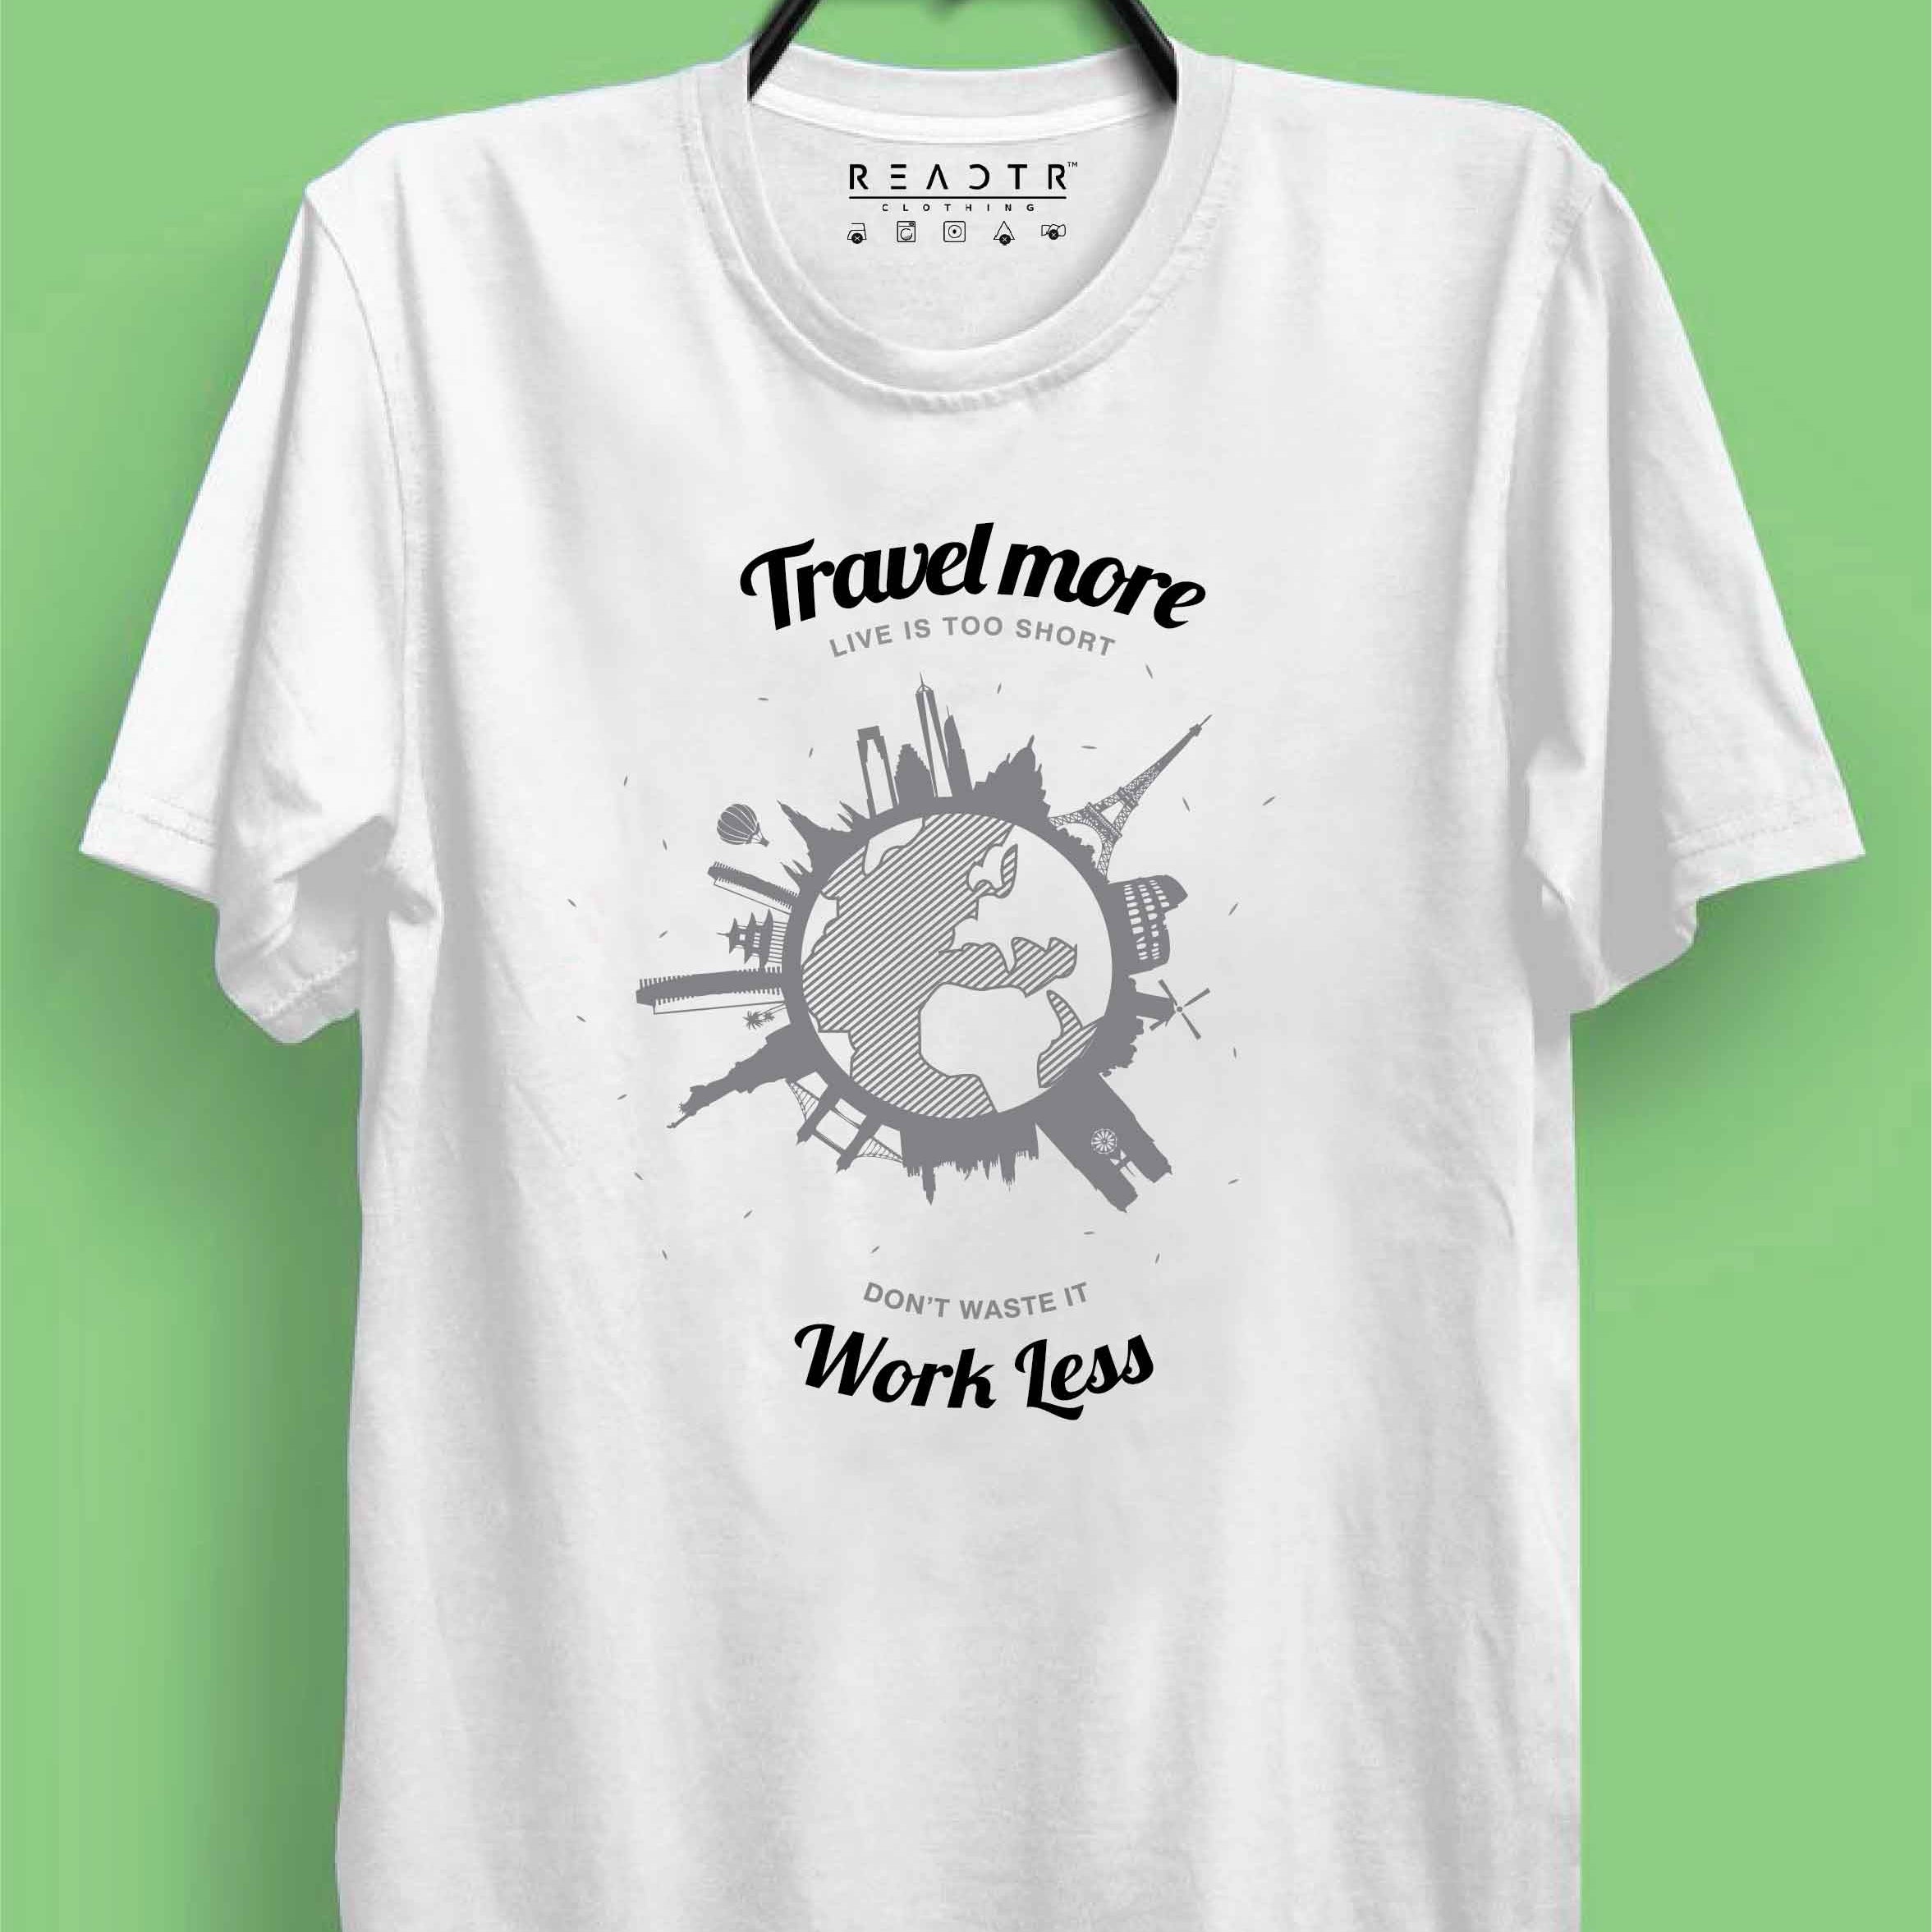 Travel More Reactr Tshirts For Men - Eyewearlabs